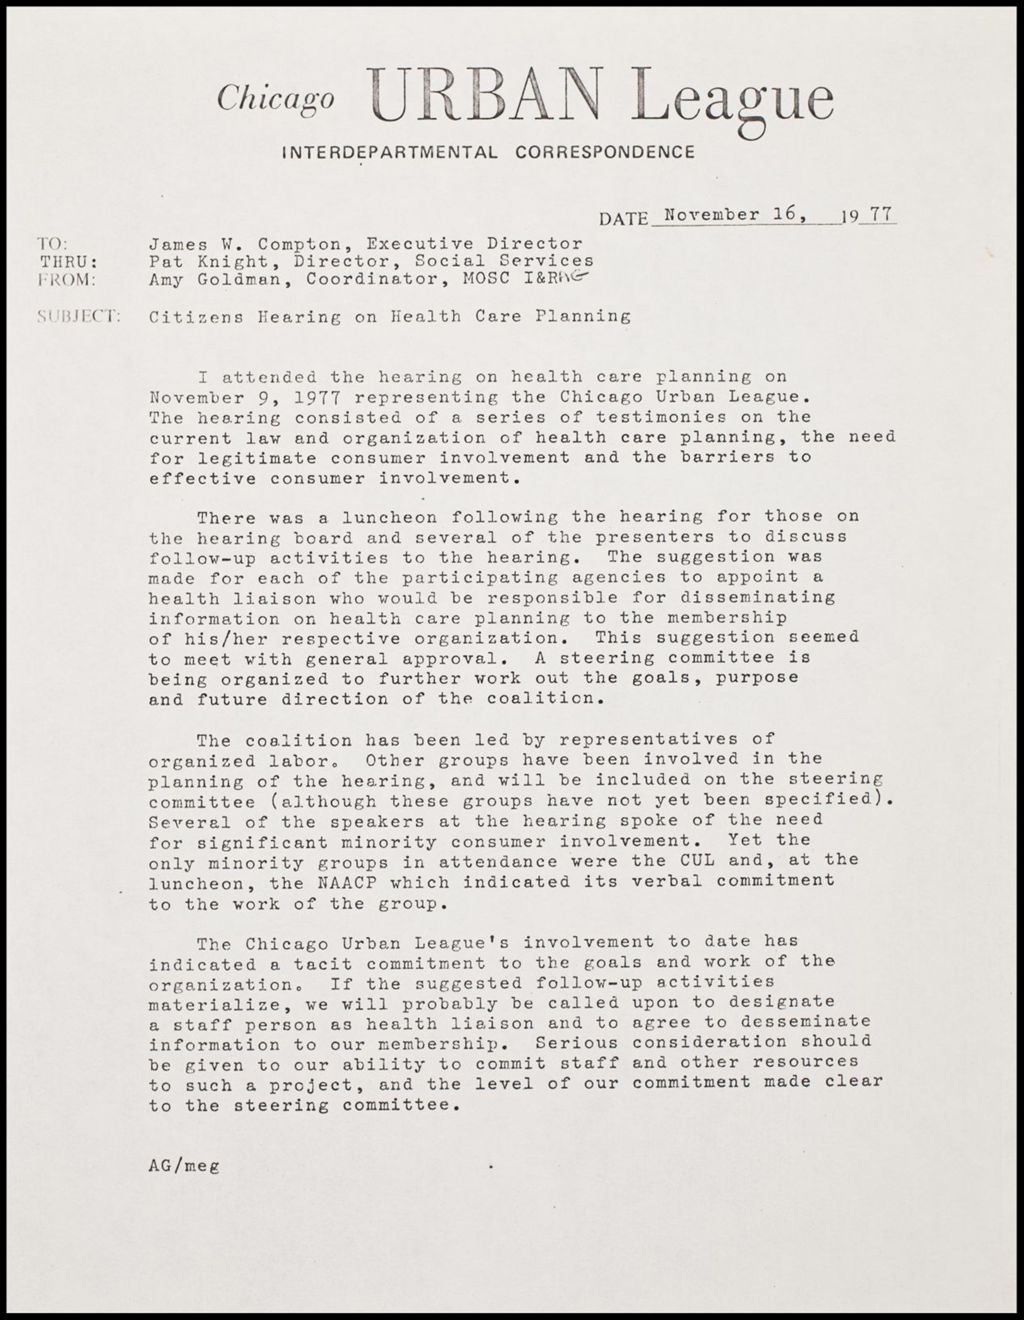 Miniature of Activity Reports, 1977 (Folder I-3179)